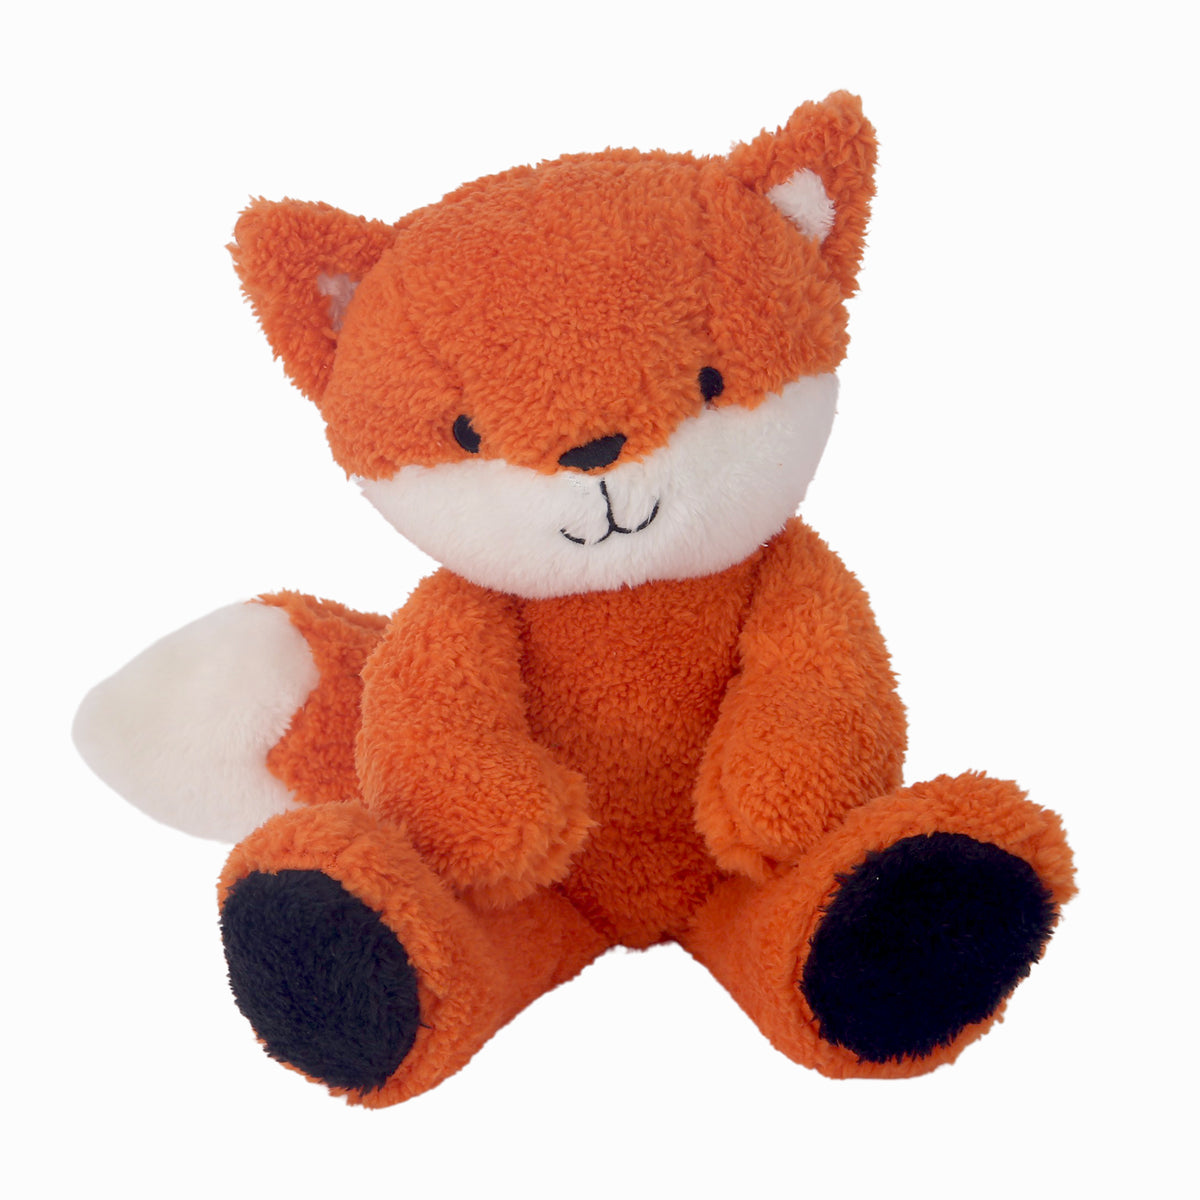 Red Fox Plush Toy